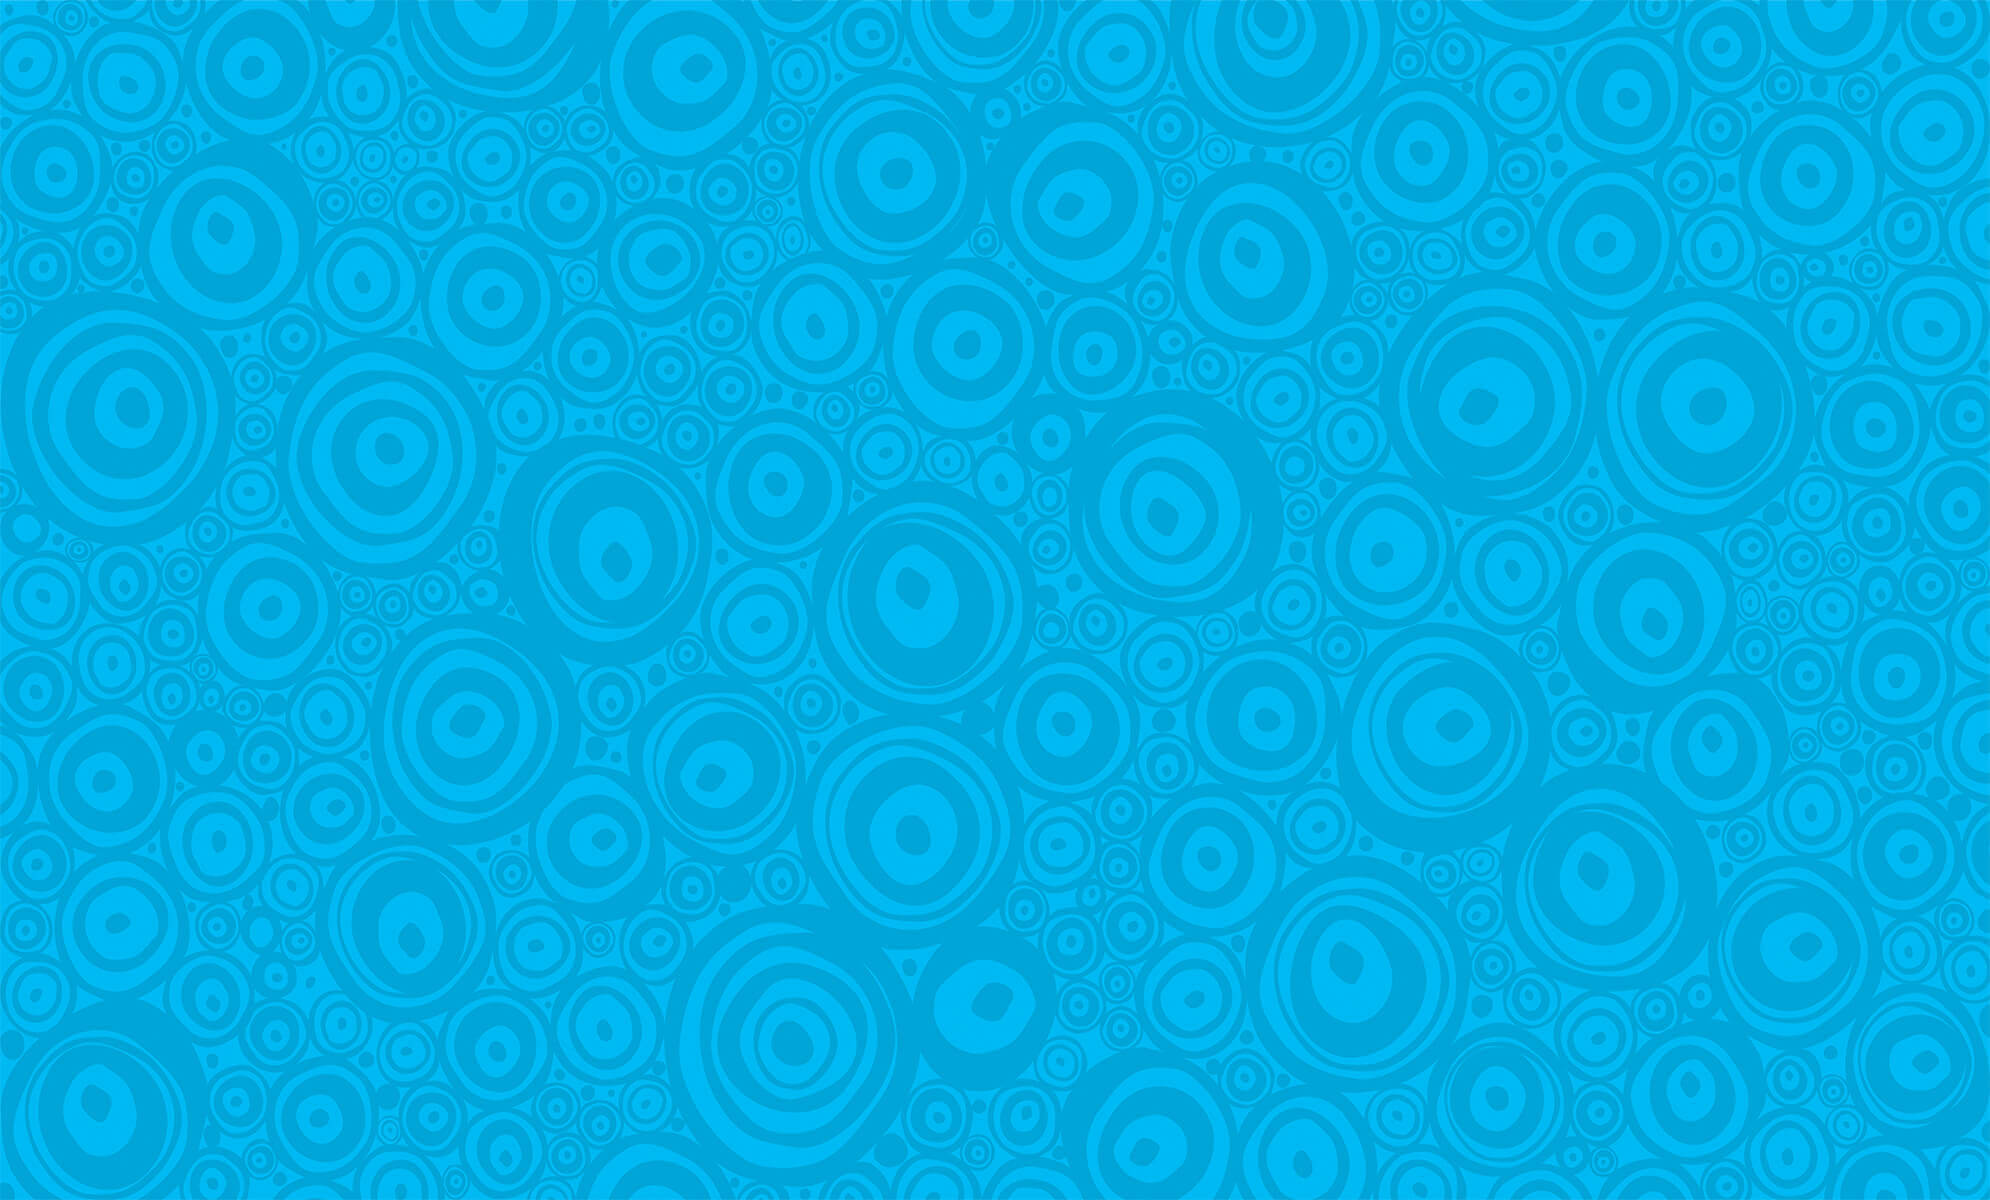 Background circles - bright blue